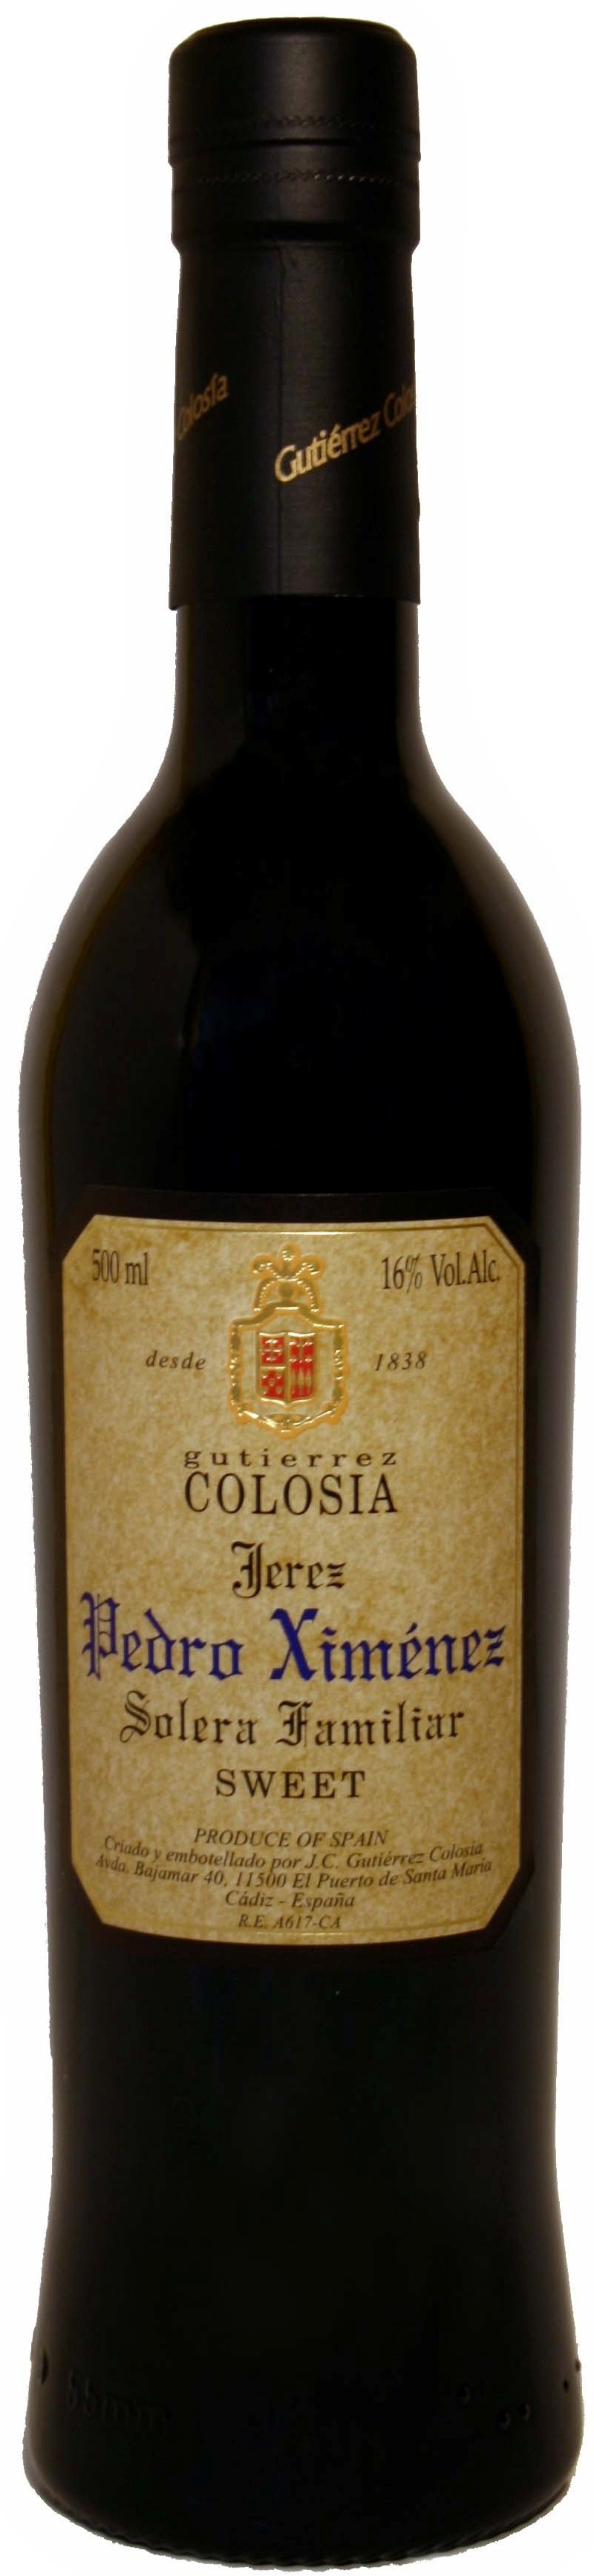 Logo del vino Colosía Solera Familiar Pedro Ximénez